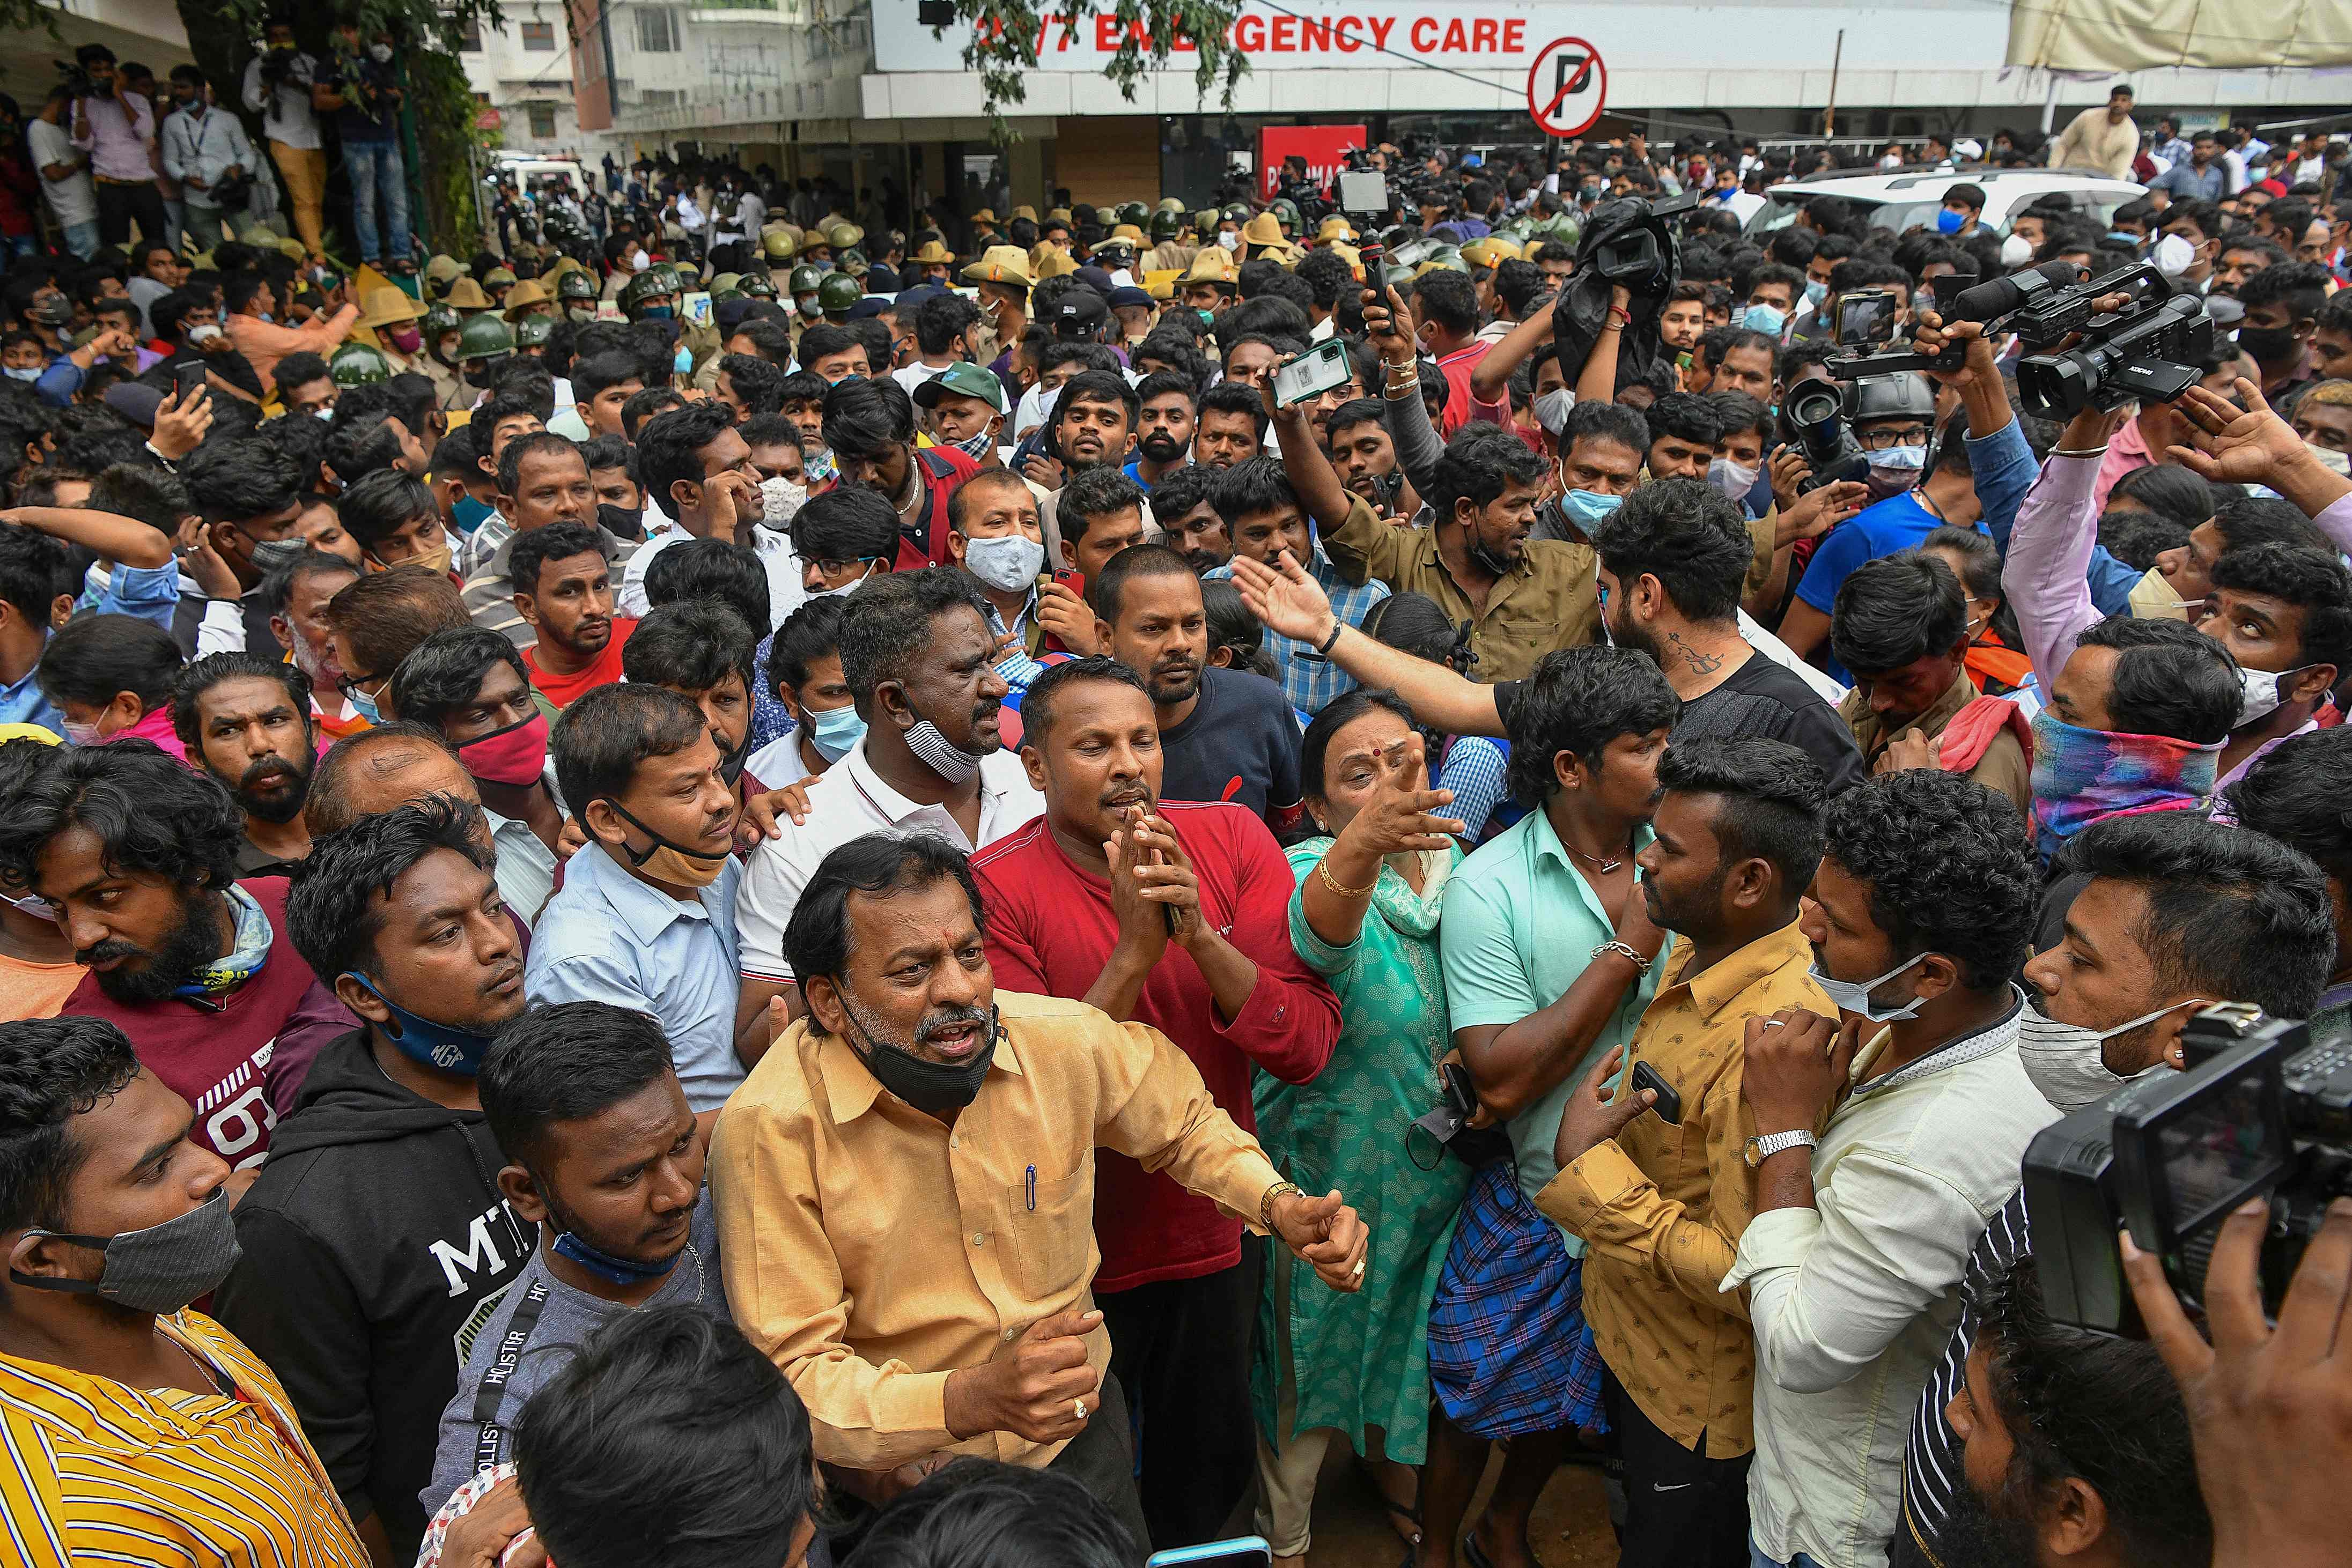 Public and fans of Kannada cinema actor Puneeth Rajkumar outside the hospital. Credit: AFP Photo